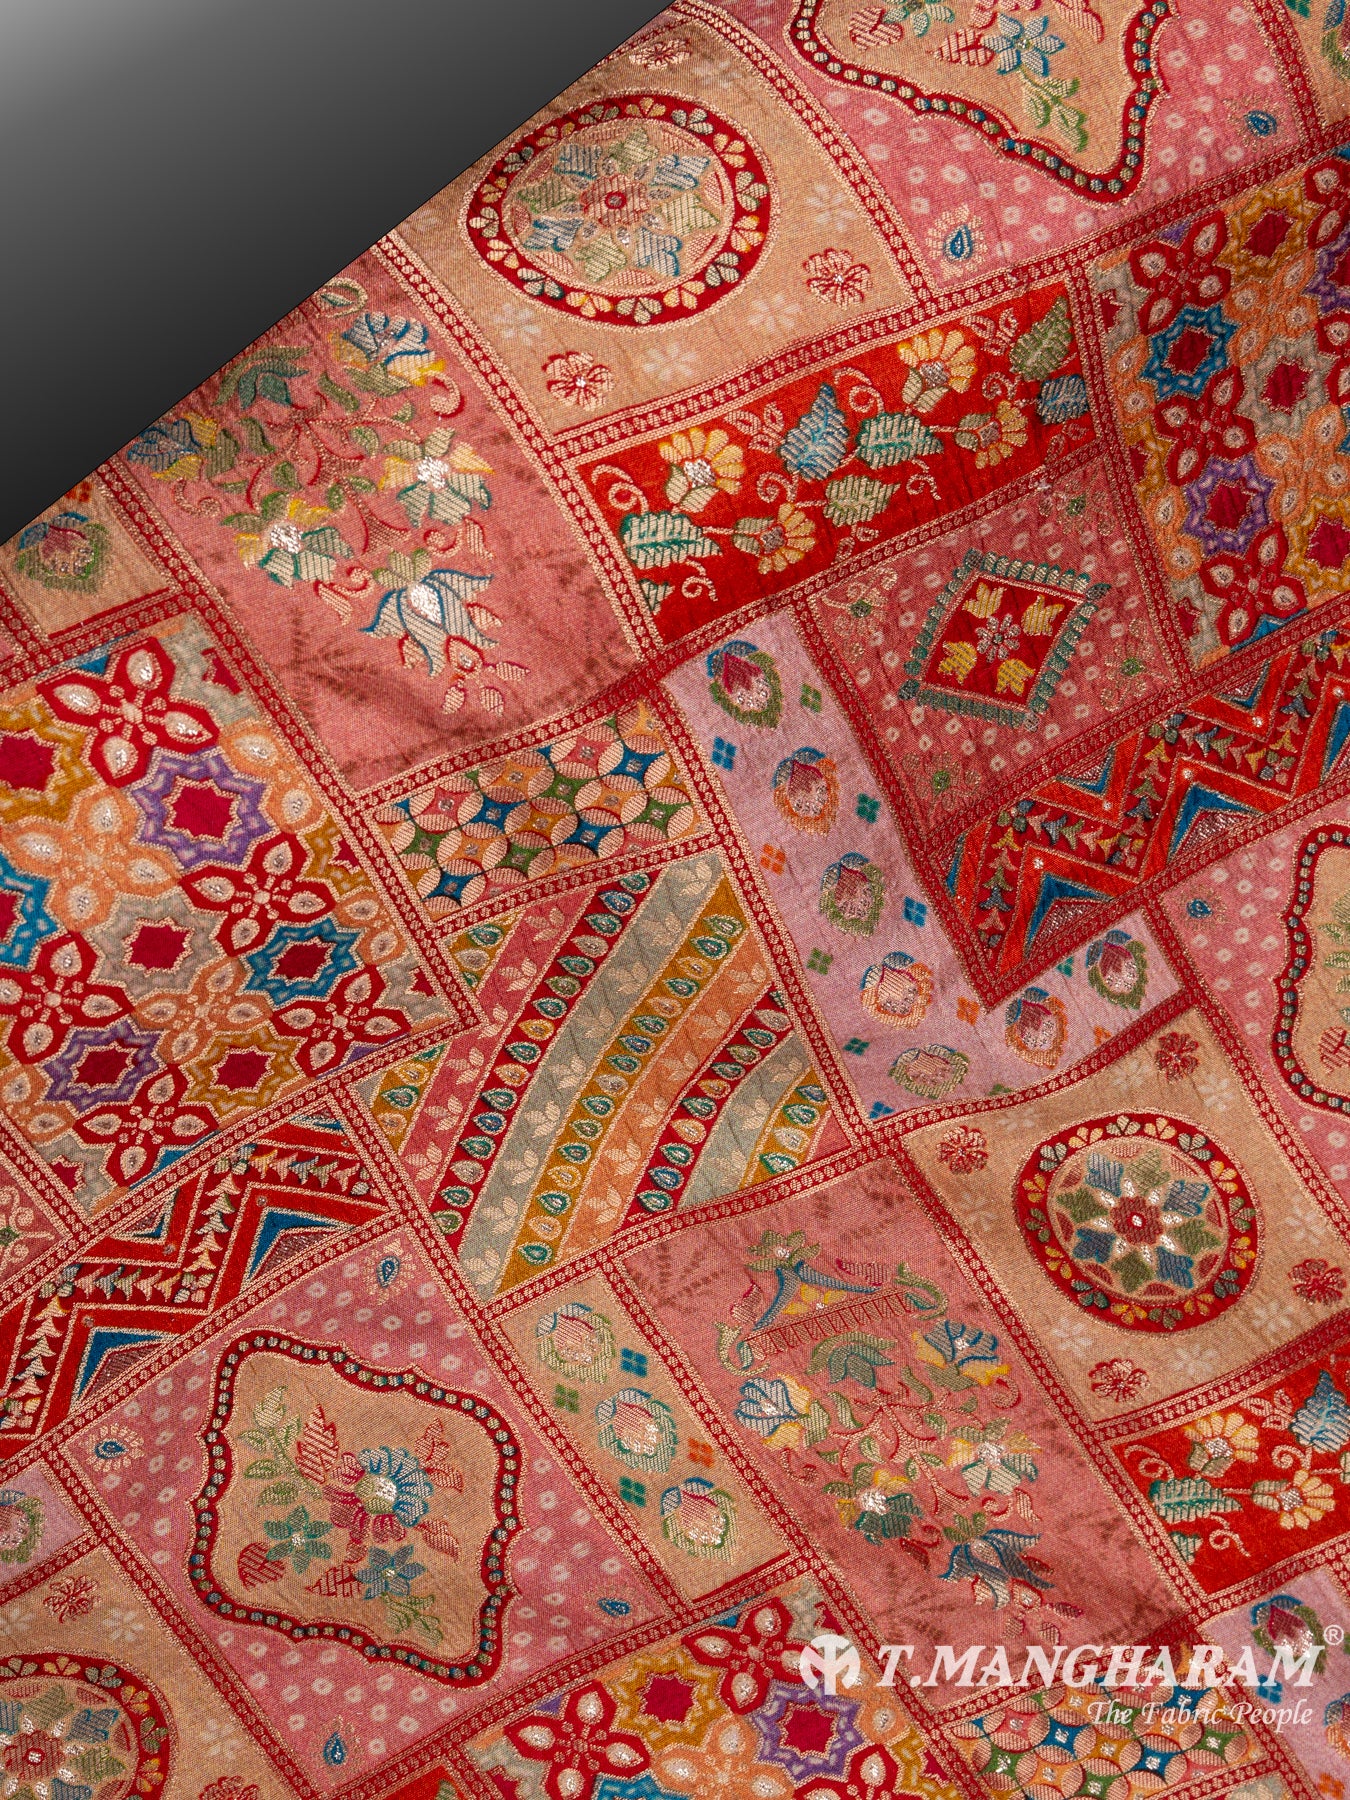 Multicolor Jacquard Embroidery Fabric - EC7748 view-2